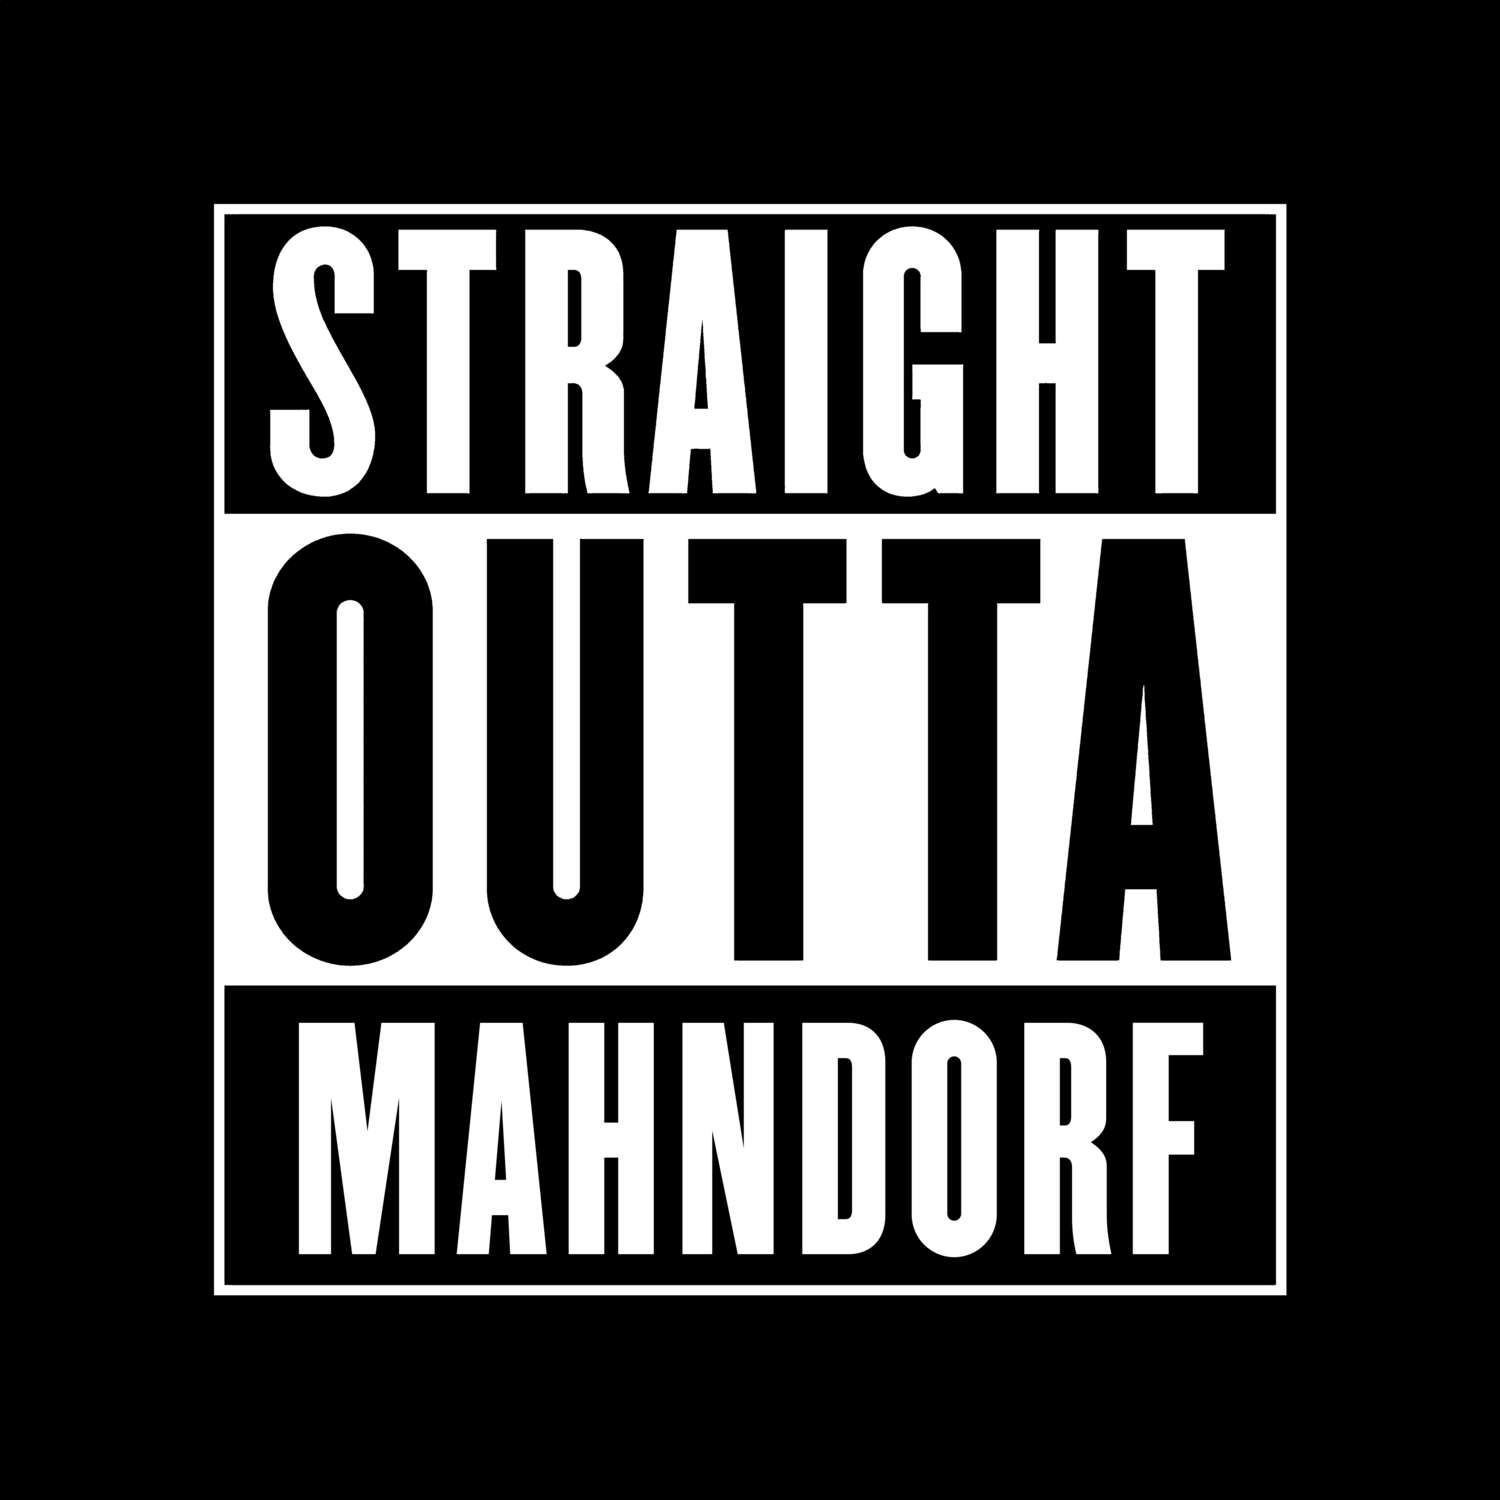 Mahndorf T-Shirt »Straight Outta«